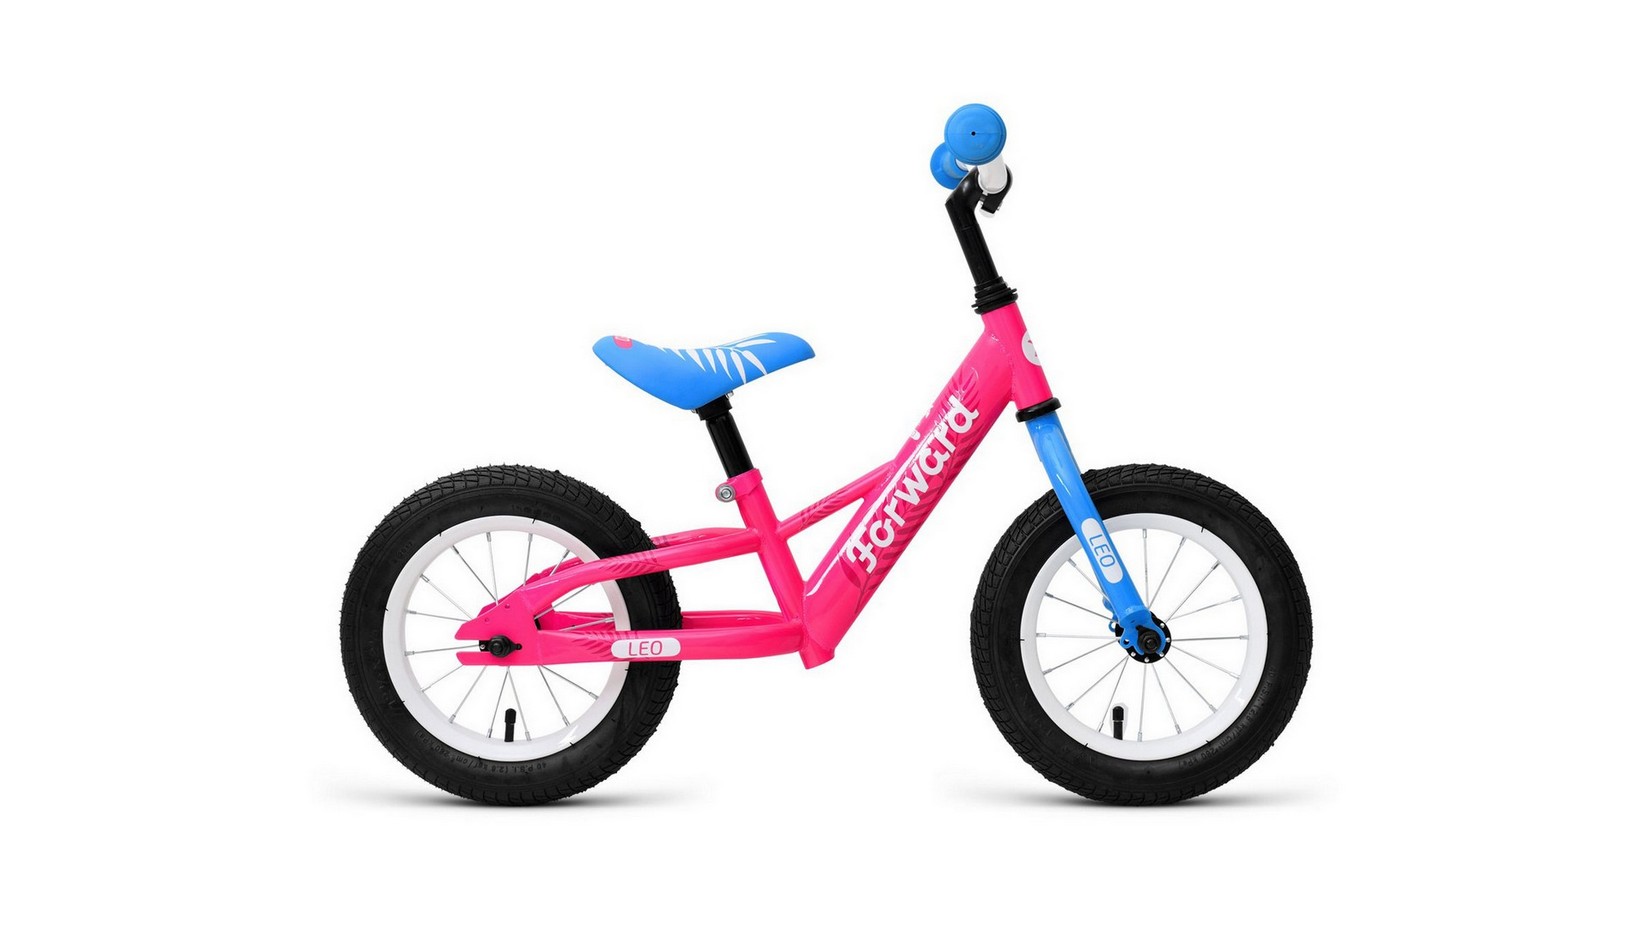 Беговел Forward LEO 2021 розовый 1BKW1R1A1002 женский велосипед stinger liberty evo год 2021 розовый ростовка 20 5